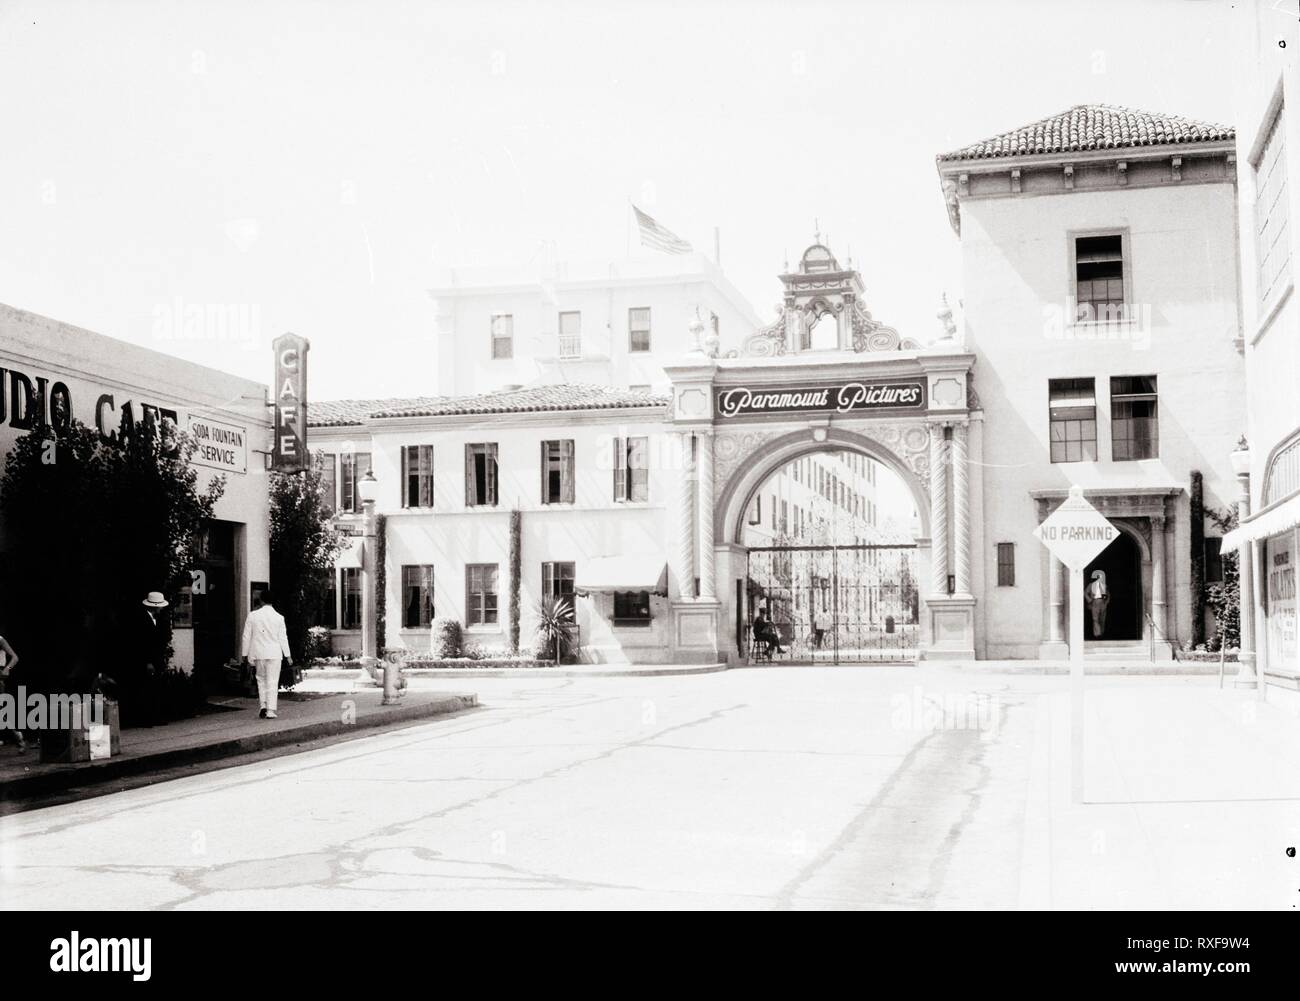 La porte principale, Paramount Studios, Hollywood, Californie, 1931 Banque D'Images